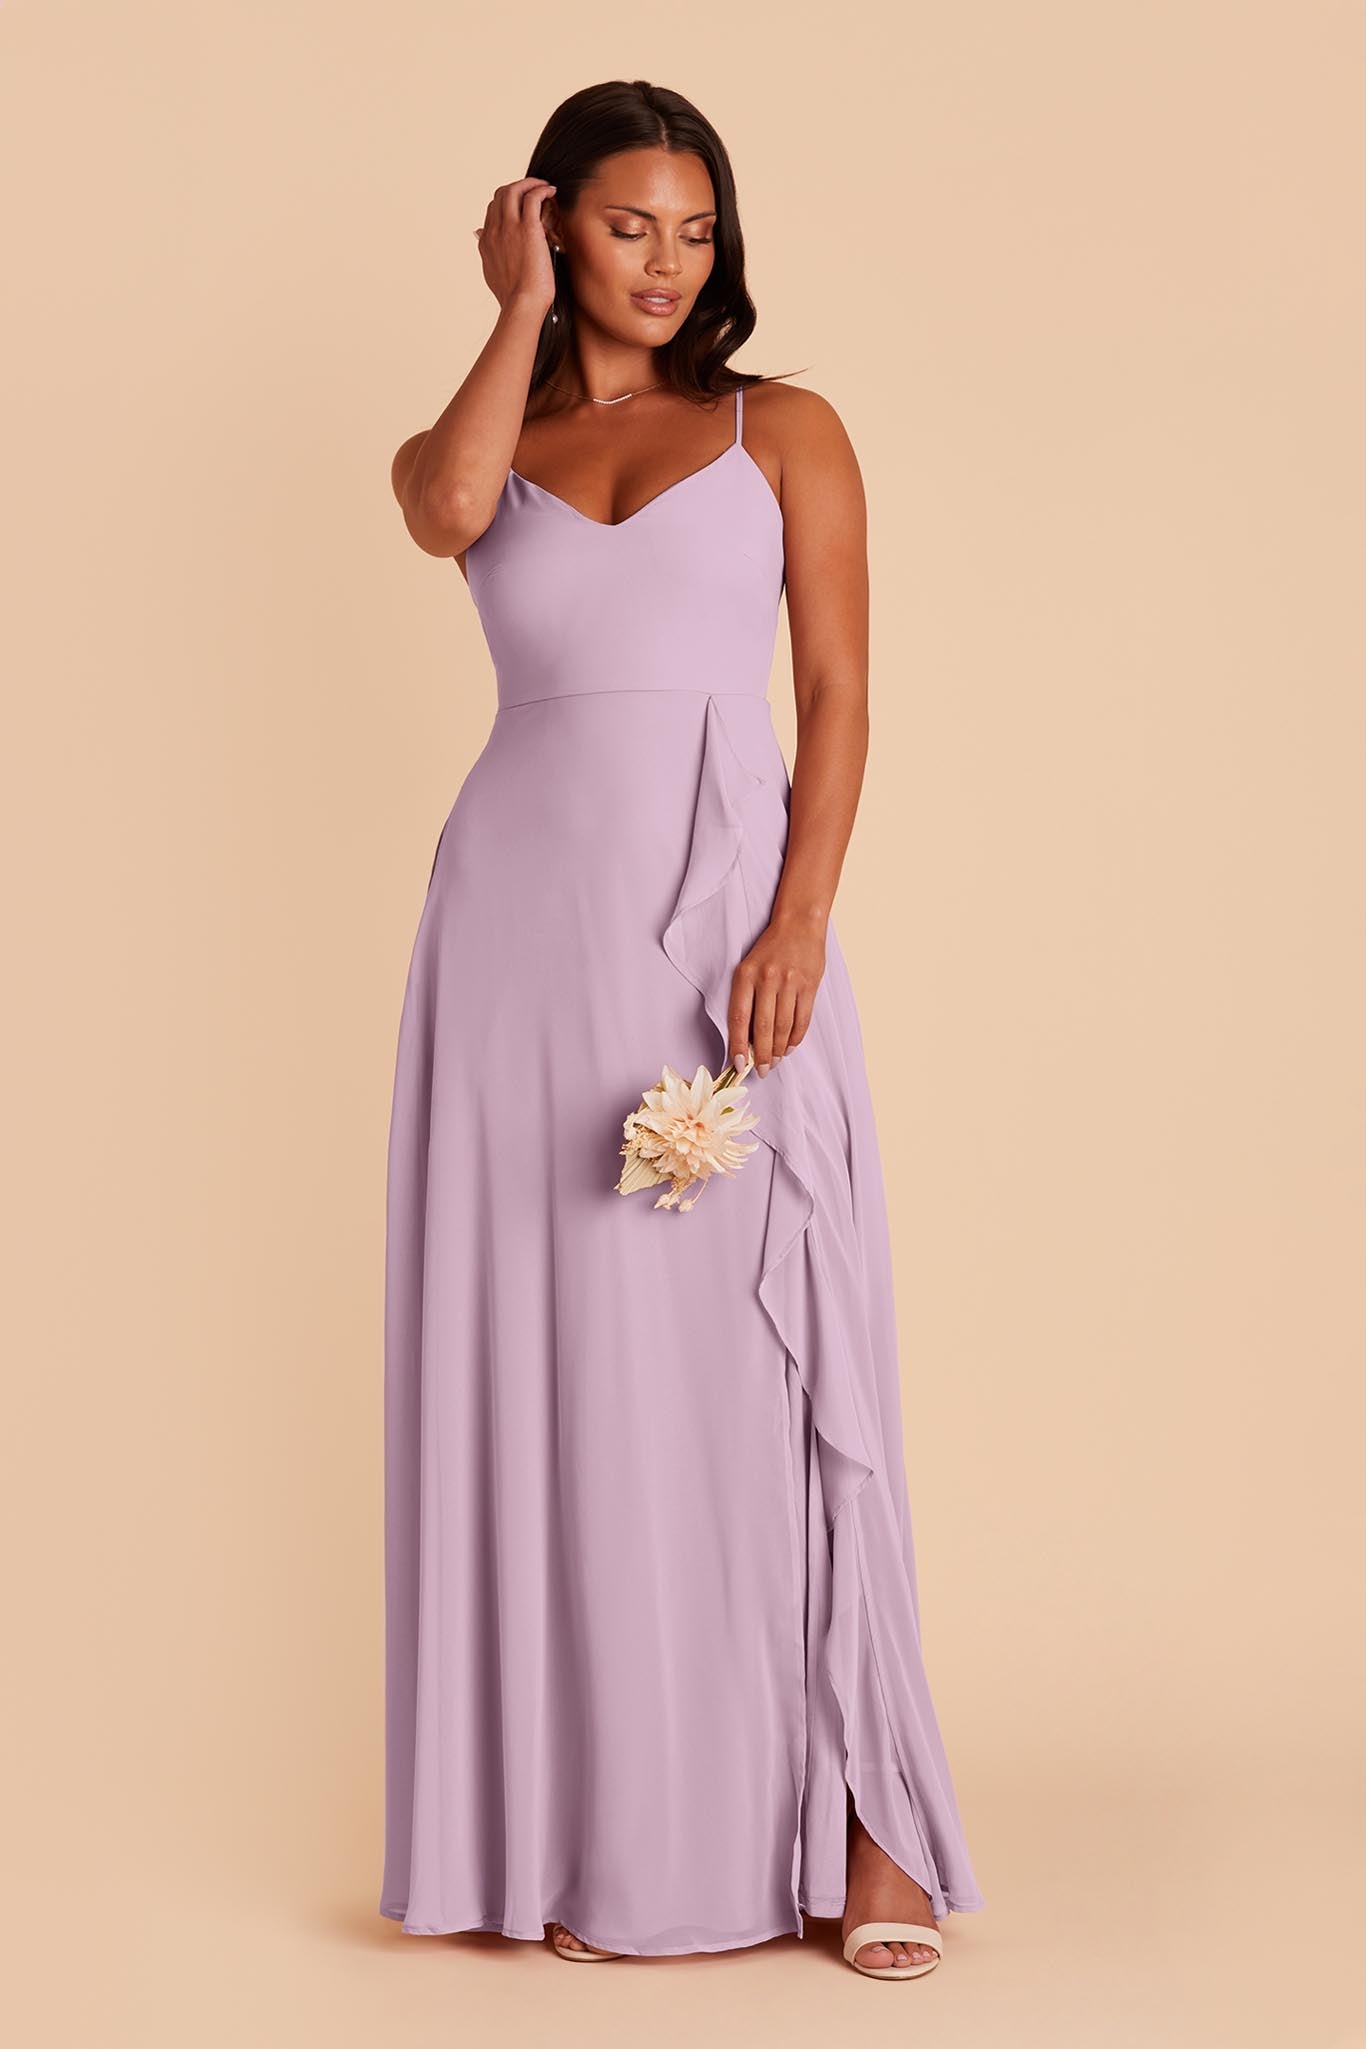 Lavender Theresa Chiffon Dress by Birdy Grey